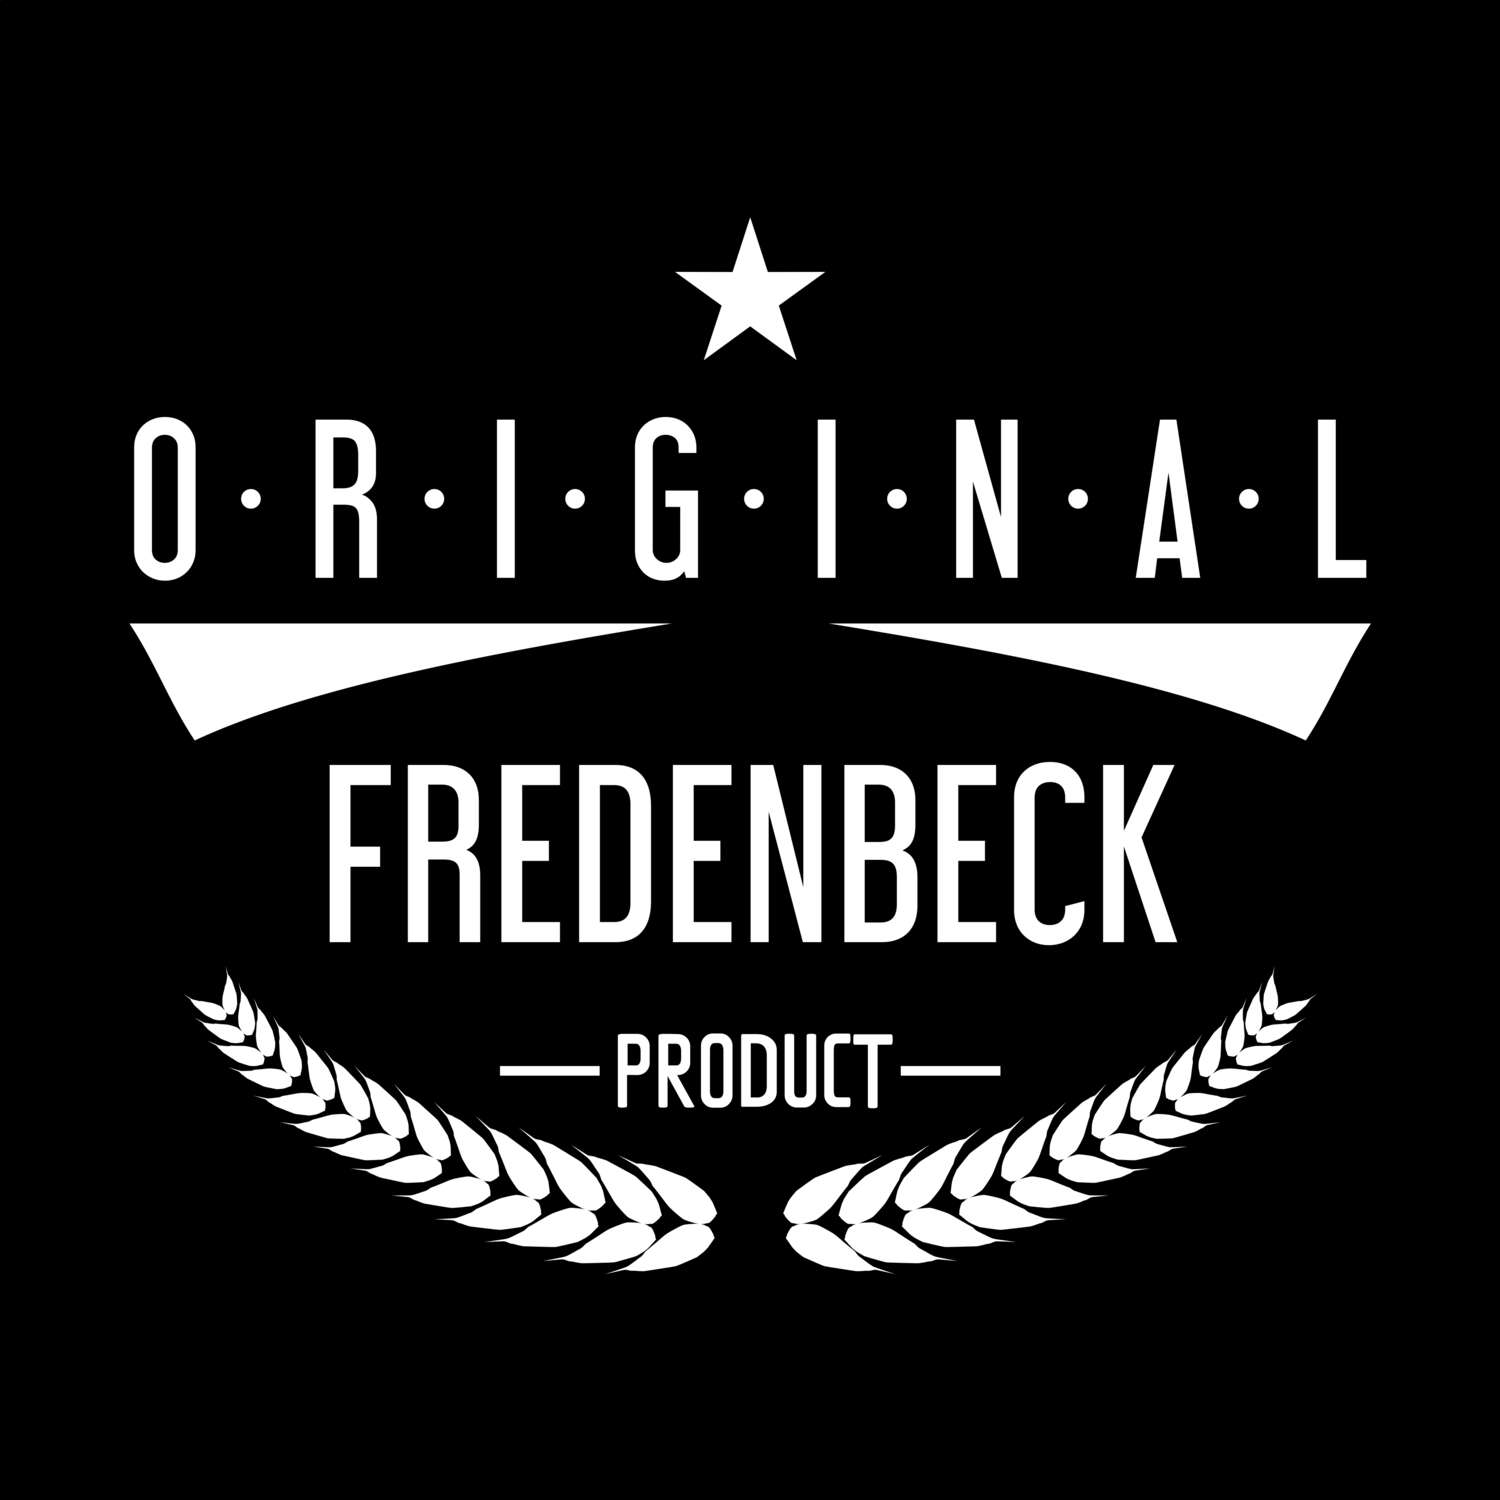 Fredenbeck T-Shirt »Original Product«